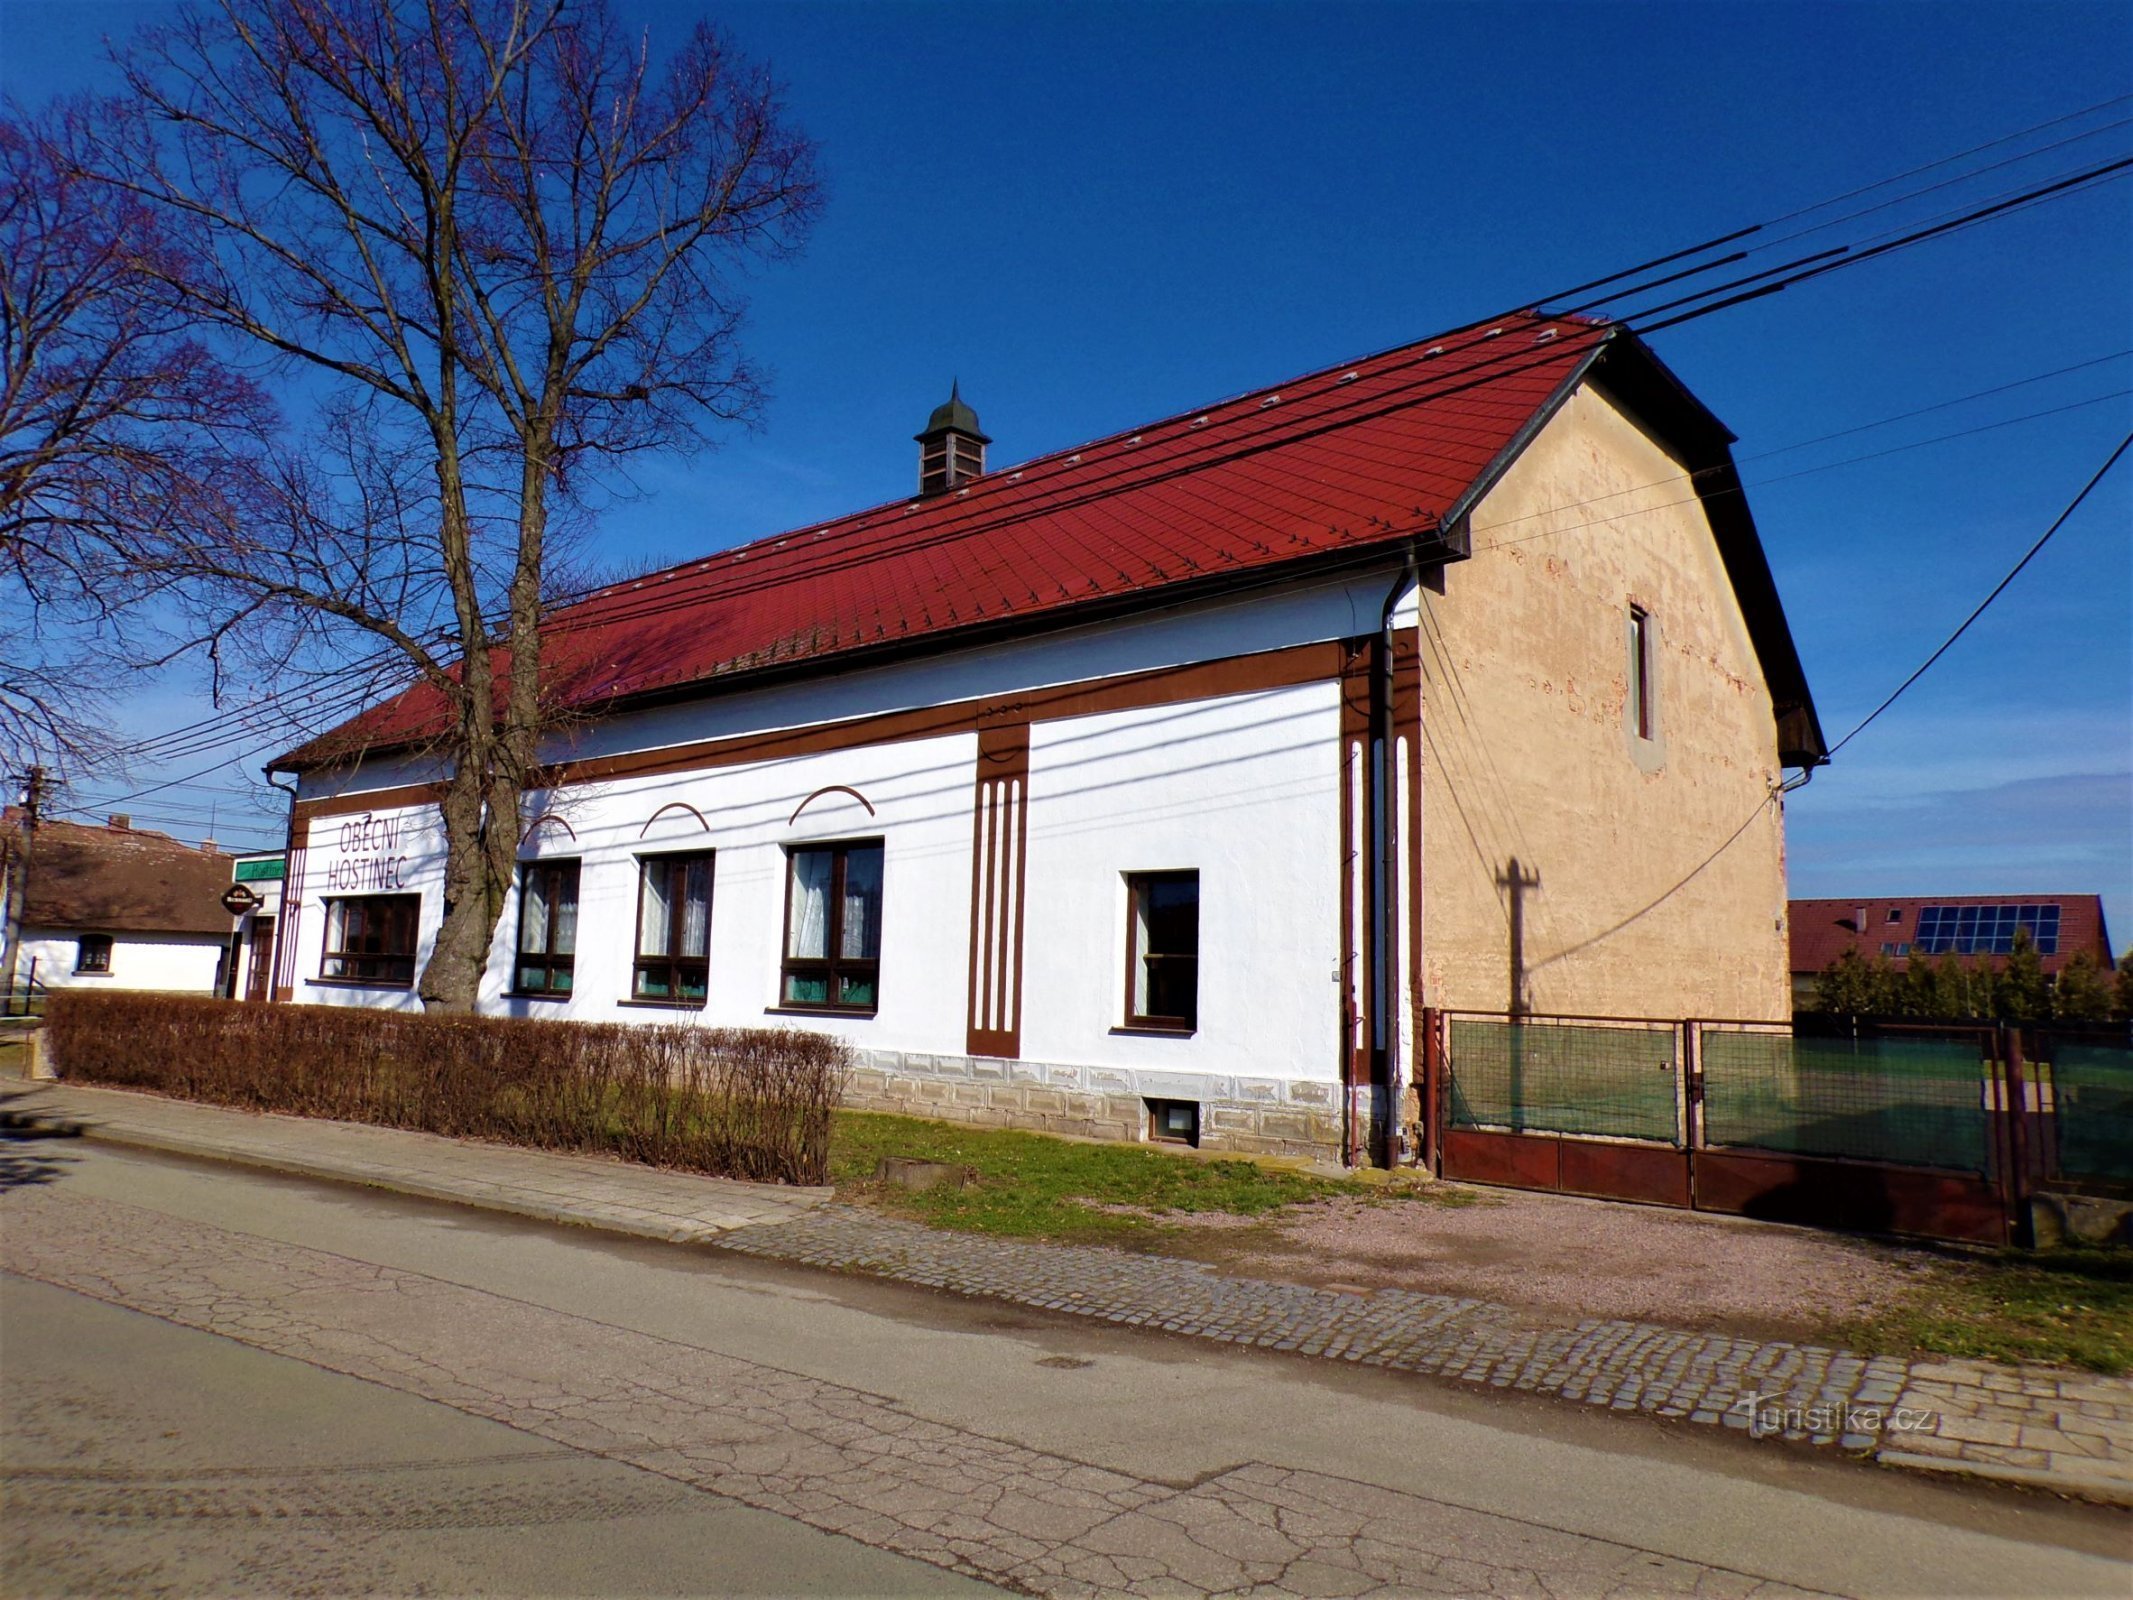 Municipal, anciennement auberge de Zadrobilk (Lhota pod Libčany, 30.3.2021)